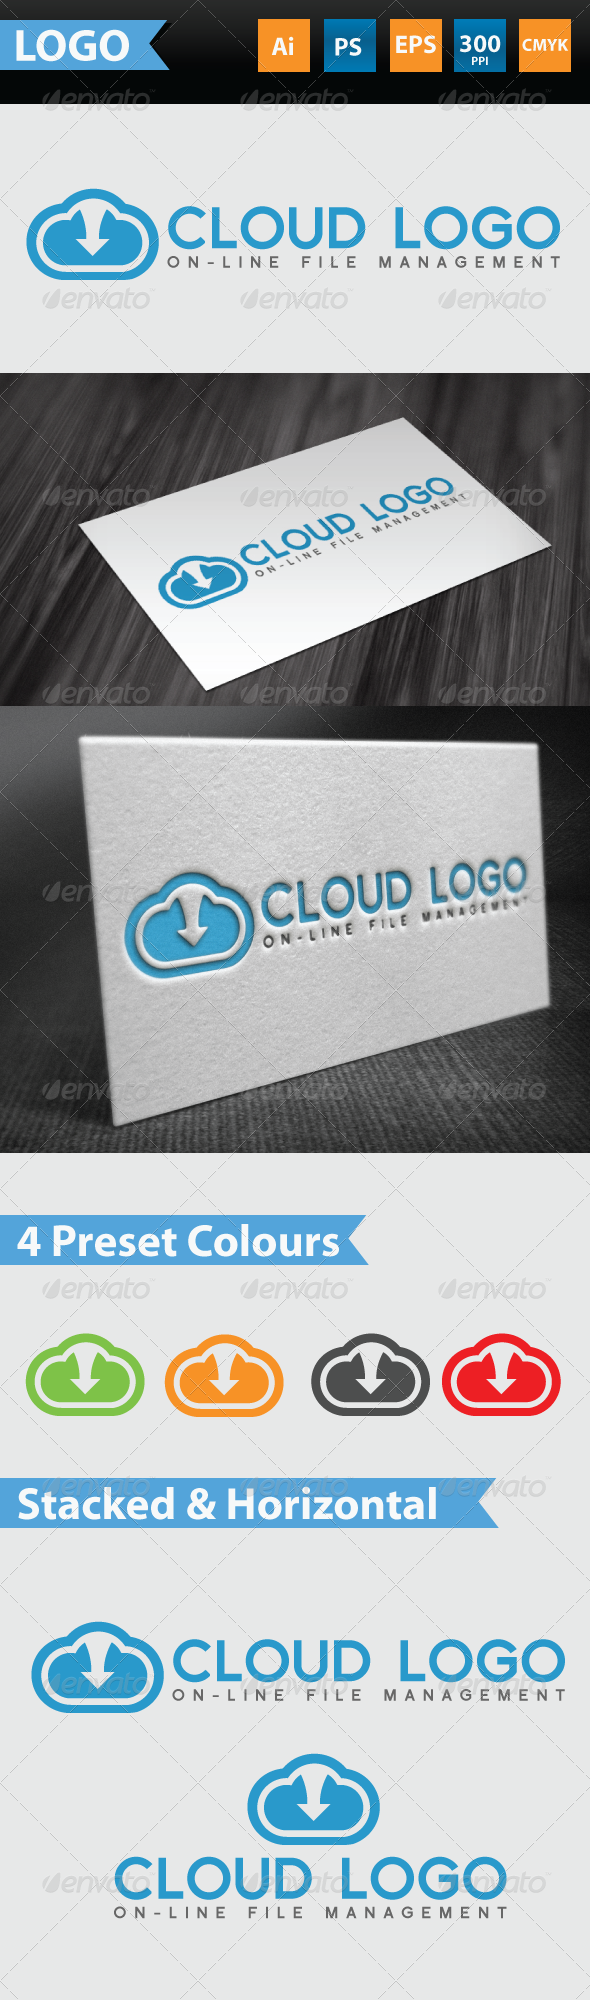 Cloud logo, on-line file management